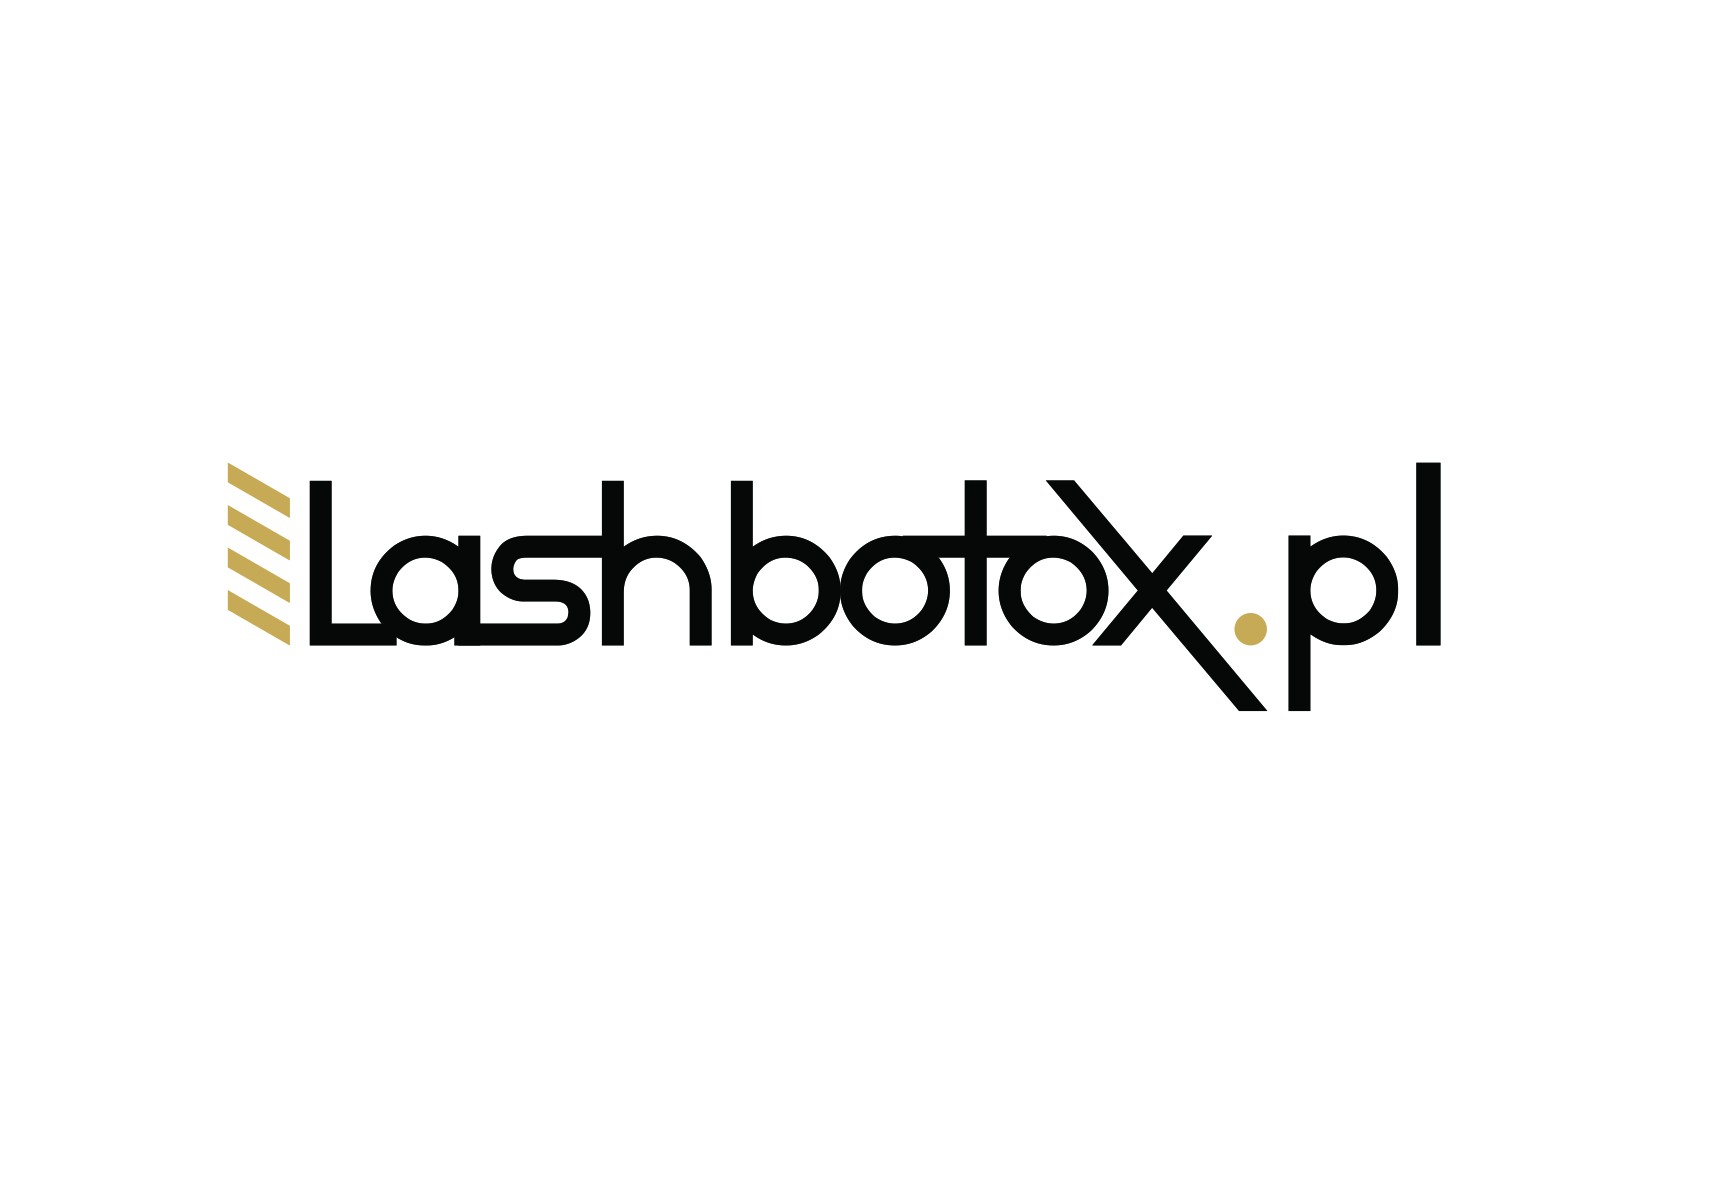 Lashbotox.pl